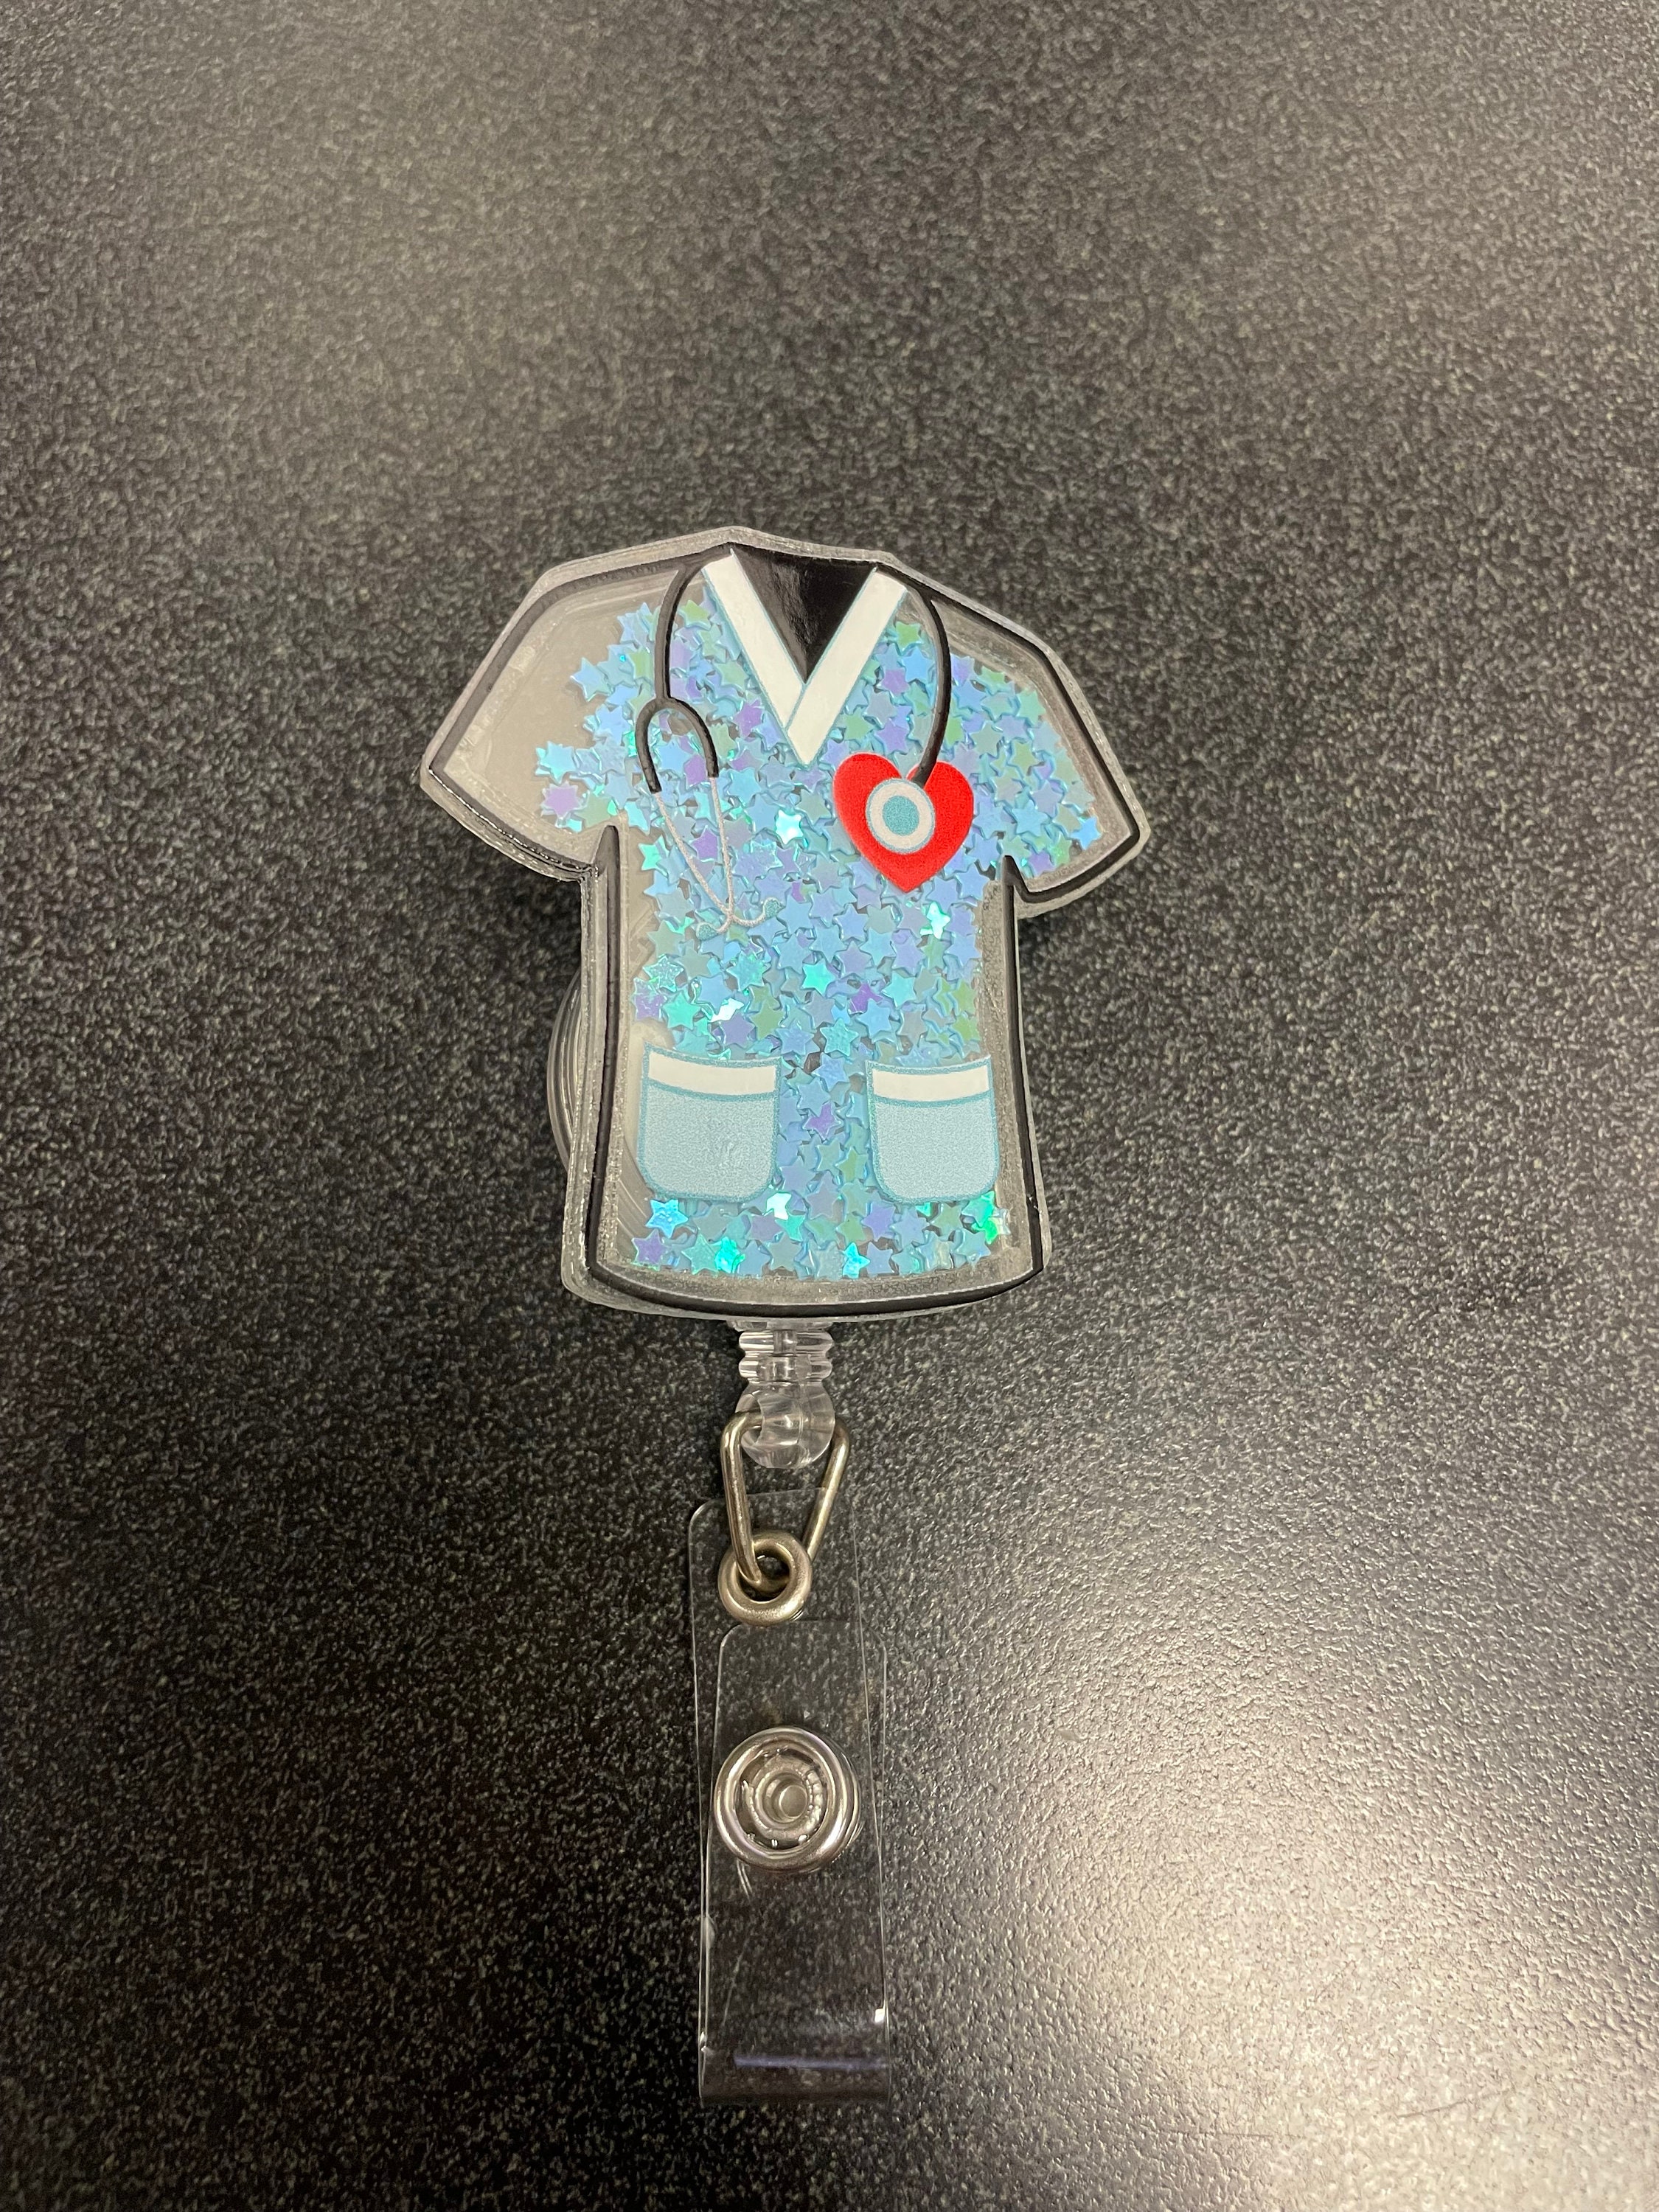 Personalized Badge Reel, Pink Custom Nurse Retractable Badge